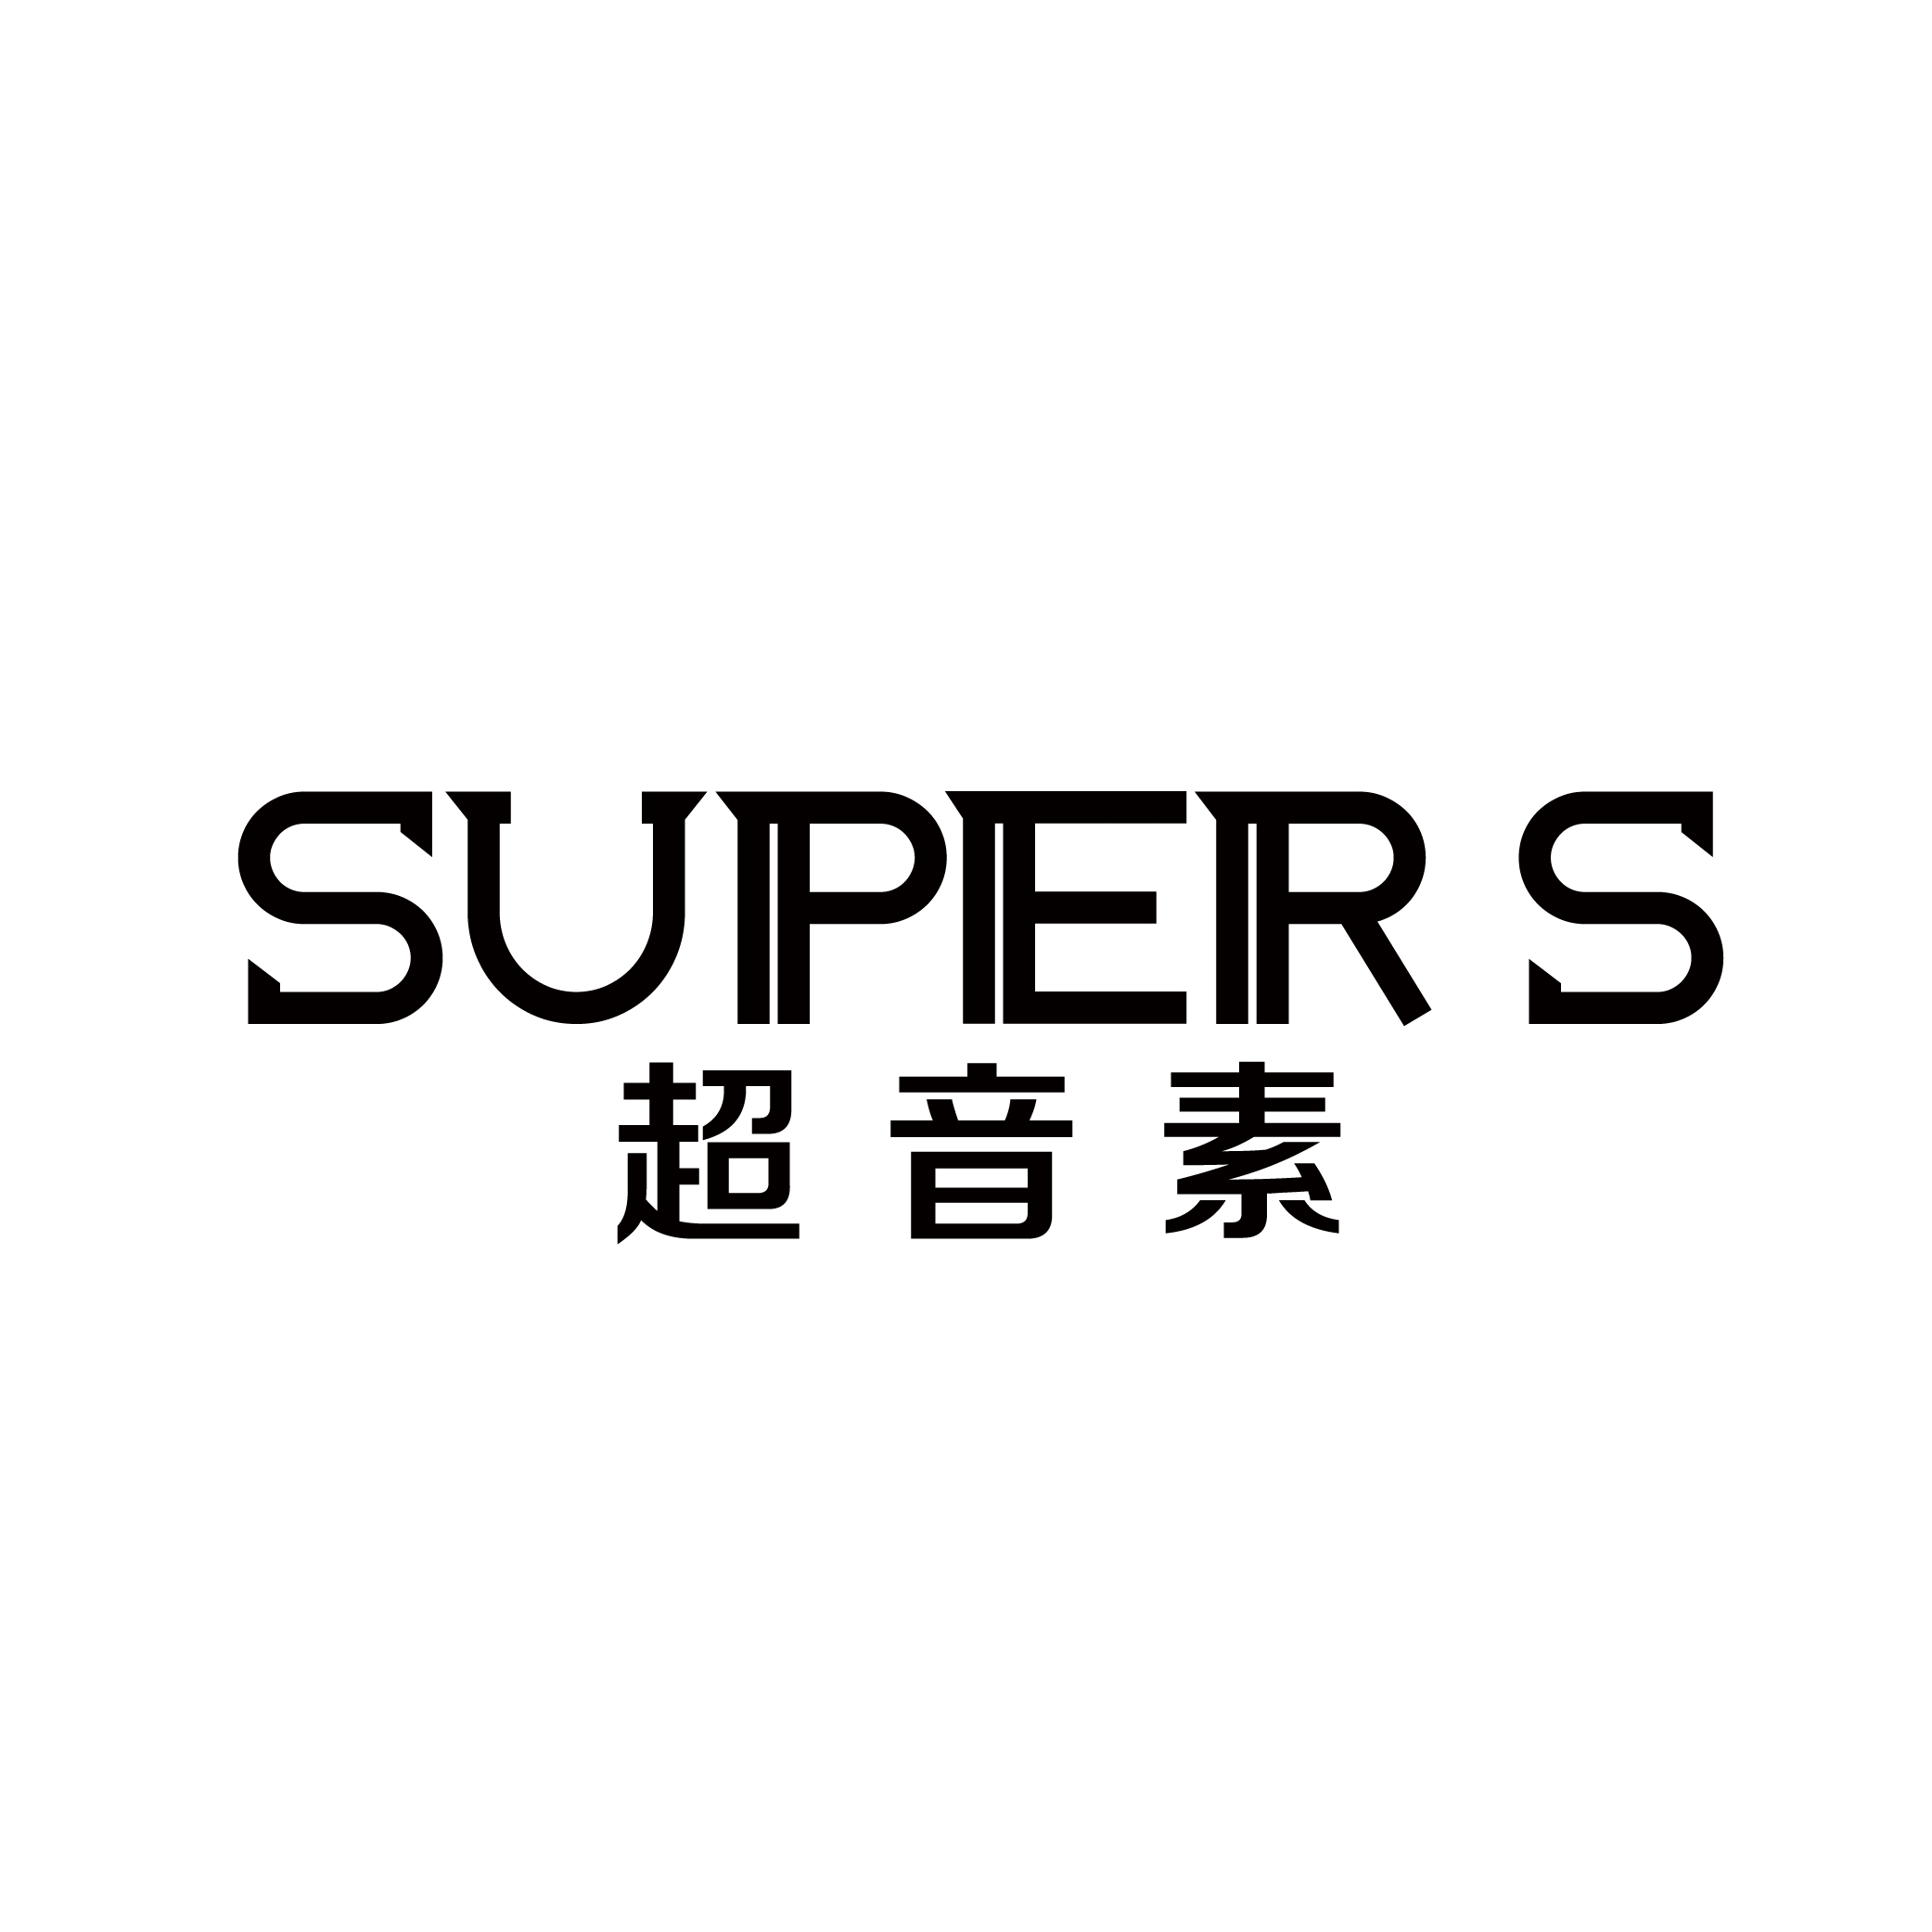 超音素 SUPER S